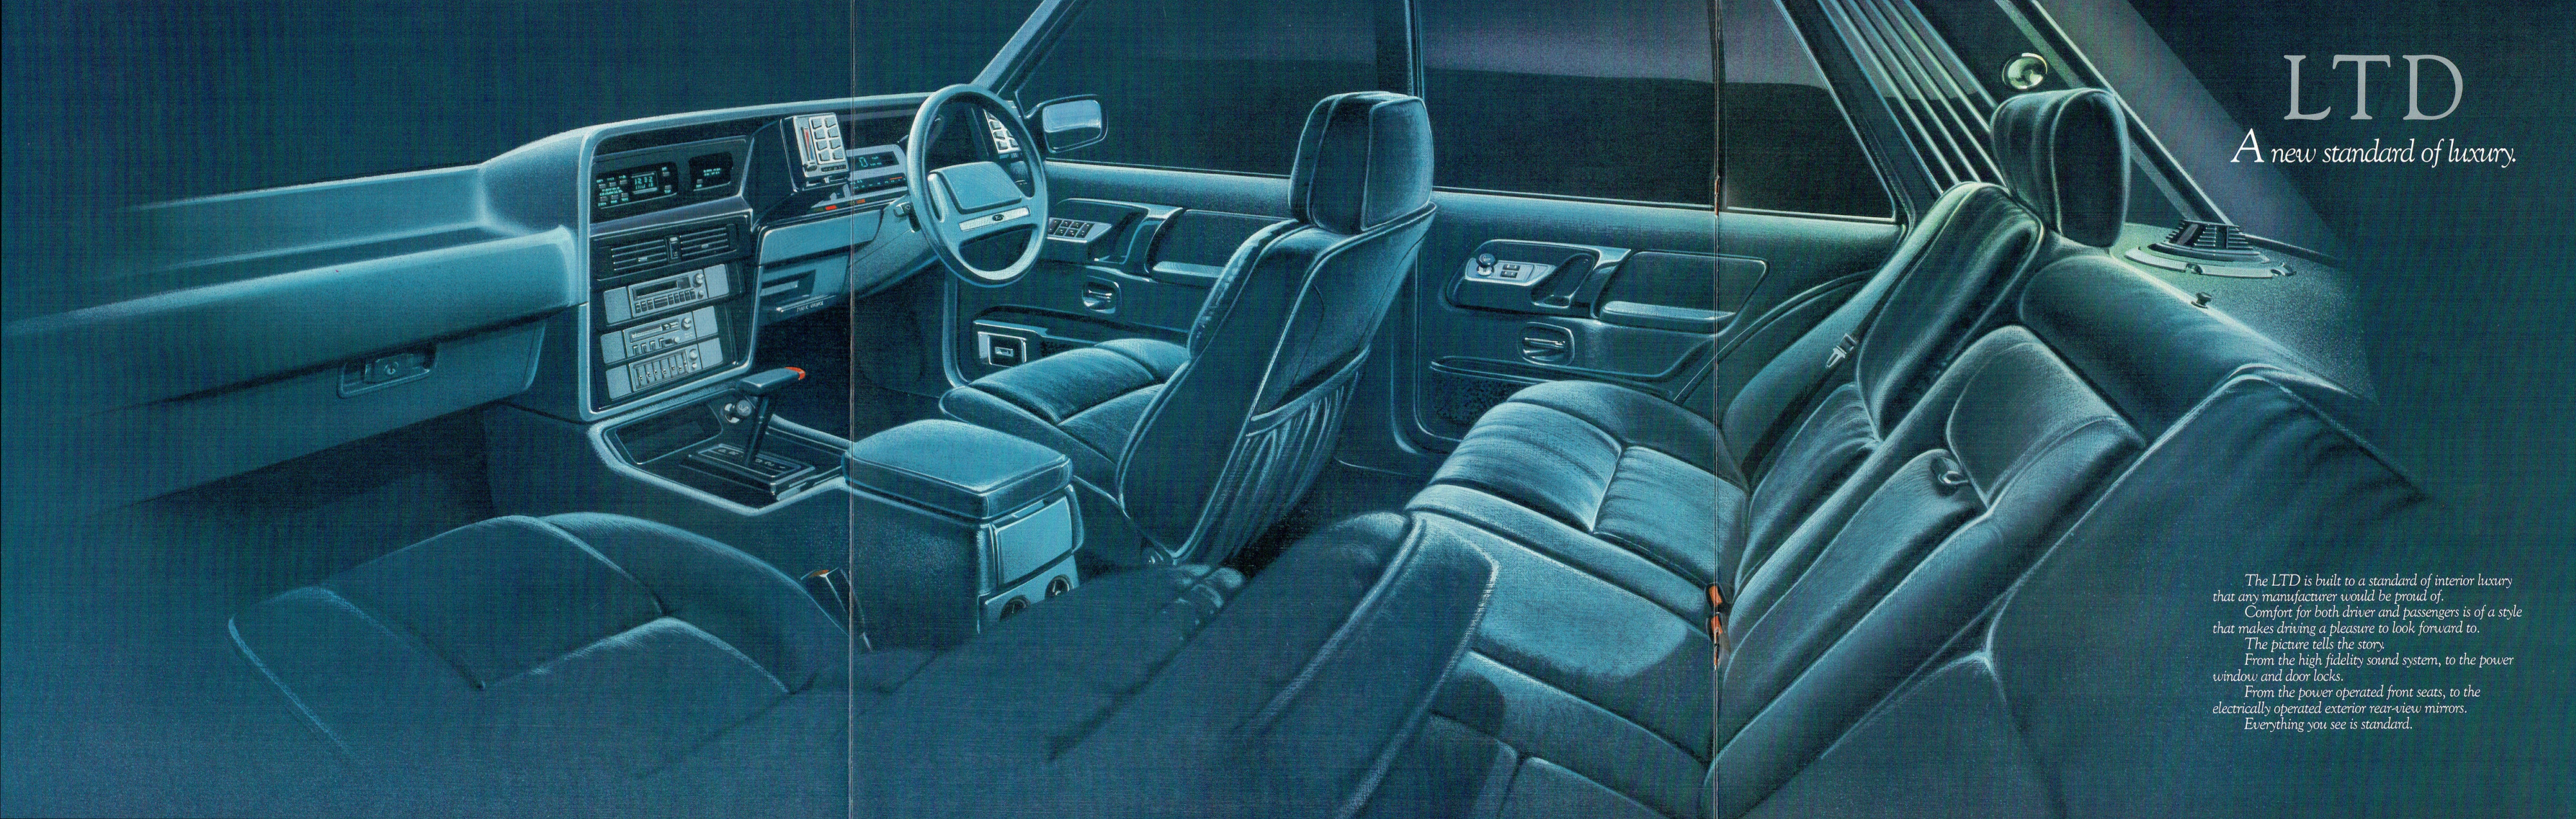 1984_Ford_FE_LTD-07-08-09